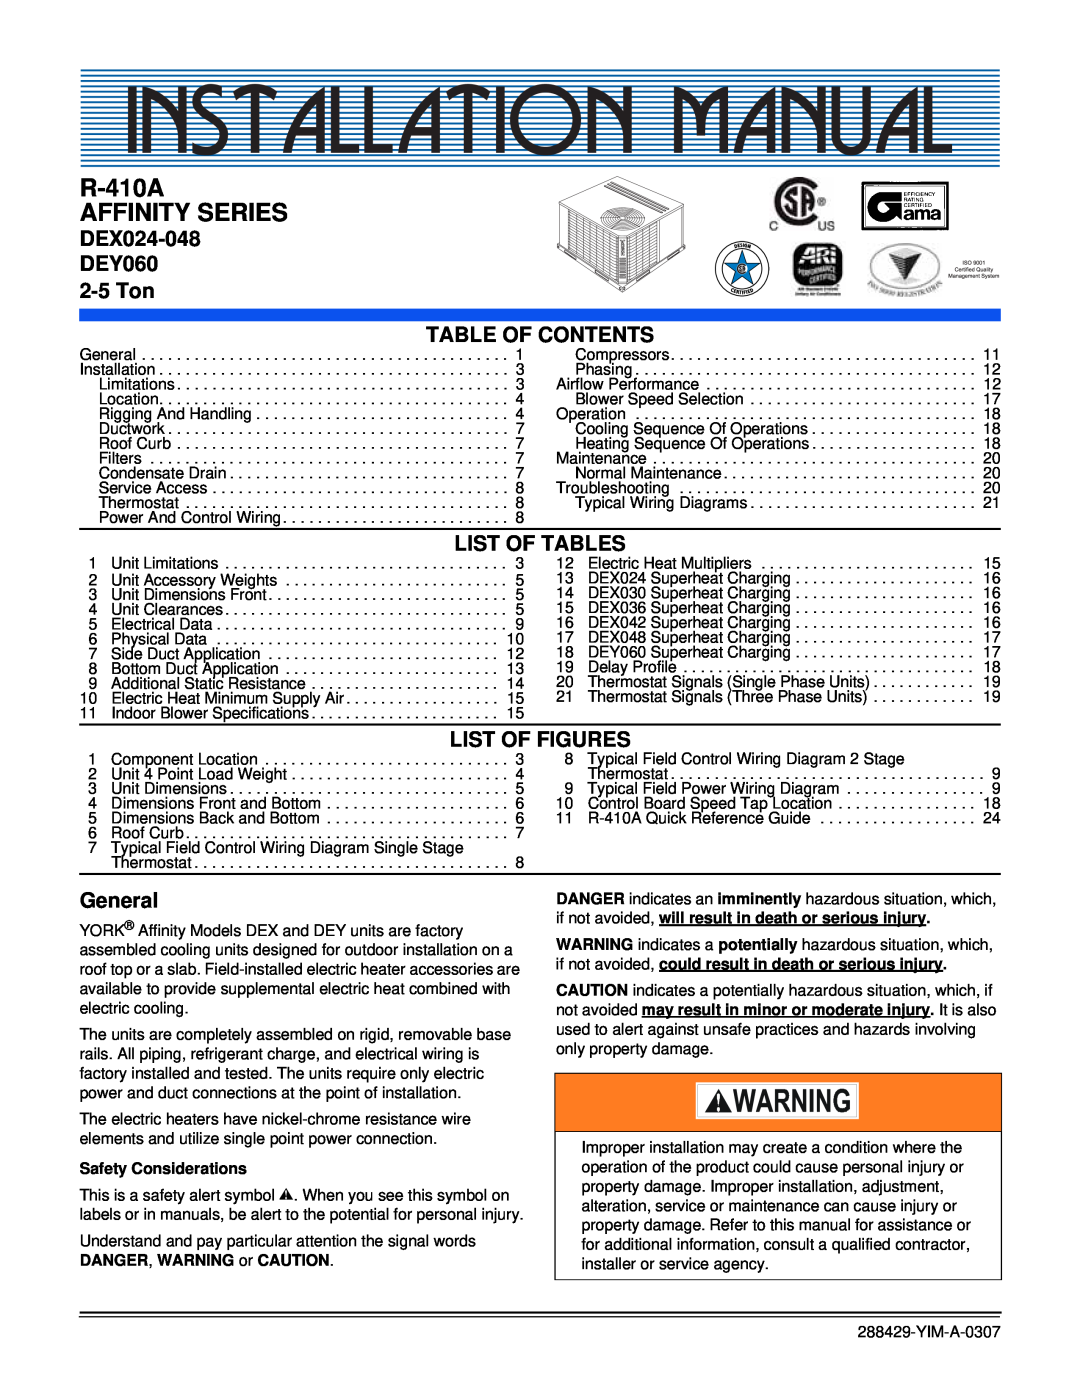 York manual ASHRAE 90.1 COMPLIANT, Technical Guide, R-410A ZH/ZR/XP SERIES 6-1/2- 12-1/2TON 60 Hertz, Description 